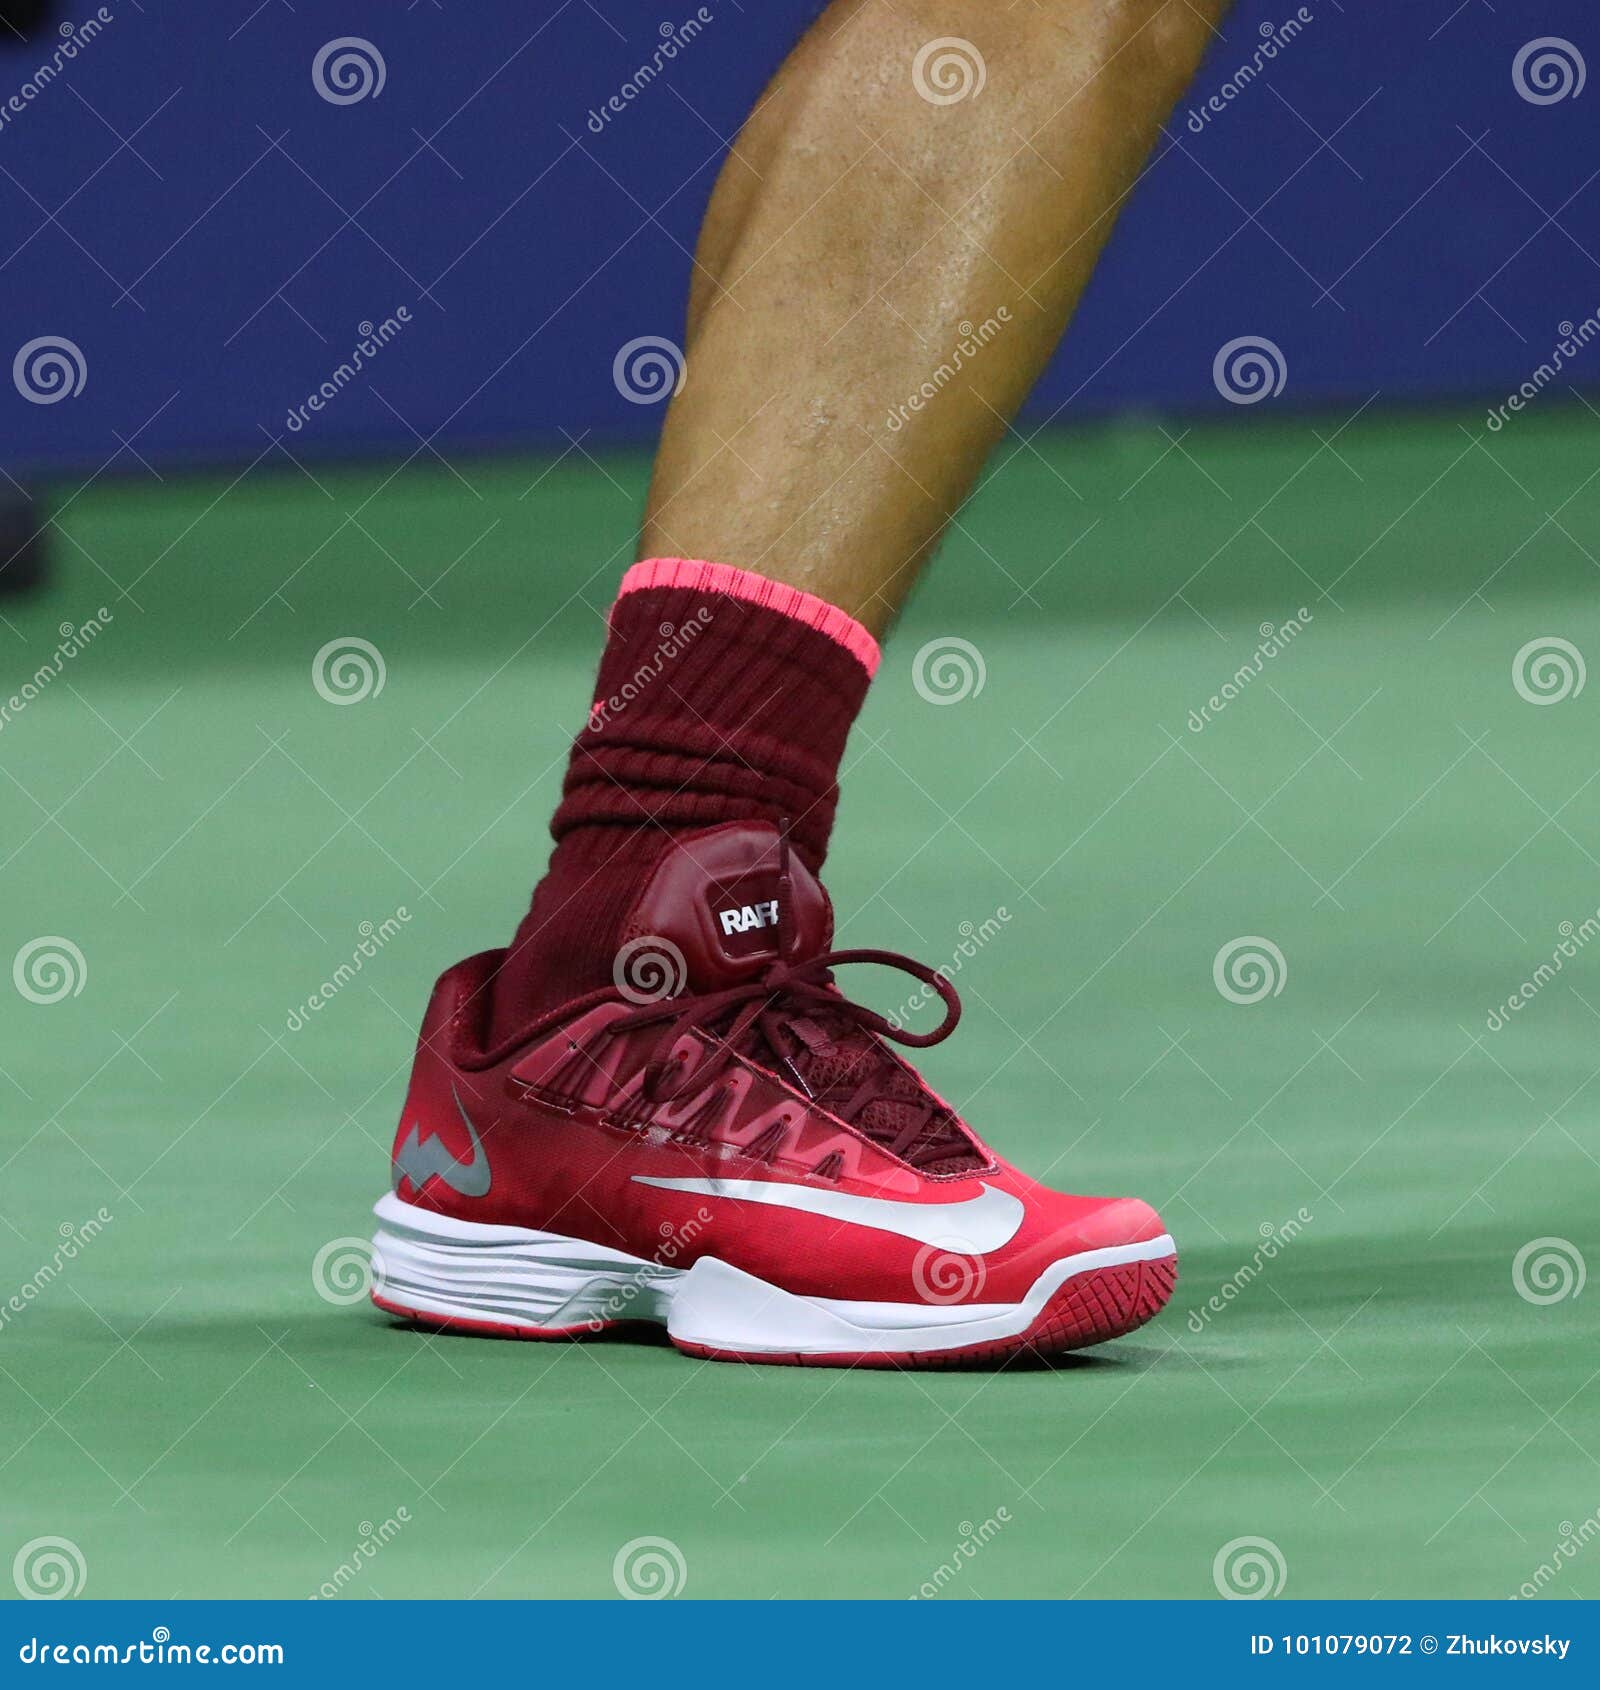 Estados Unidos rueda Por ahí Grand Slam Champion Rafael Nadal of Spain Wears Custom Nike Tennis Shoes  during US Open 2017 Match Editorial Photography - Image of jean, rafael:  101079072